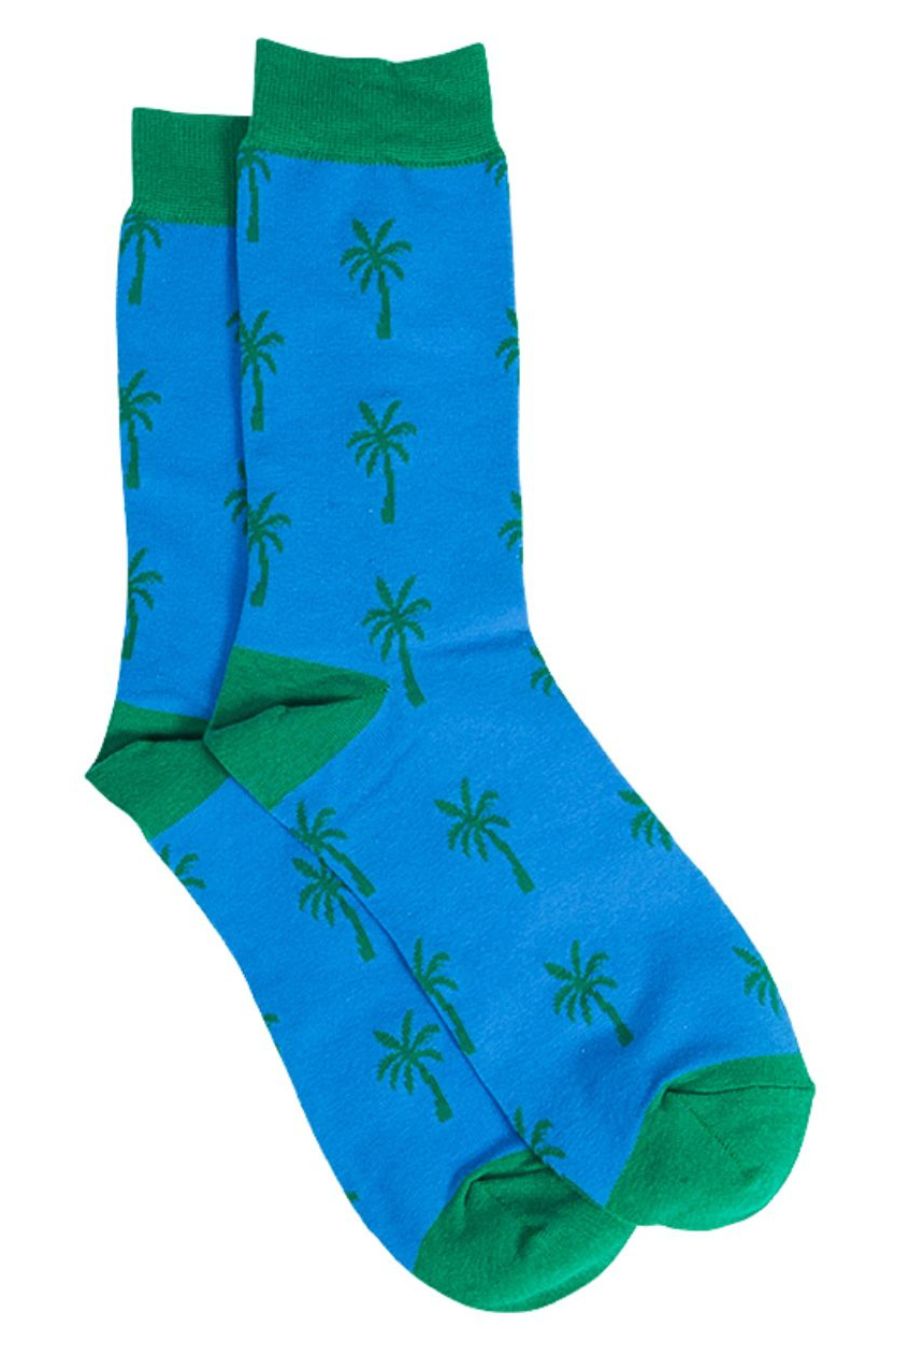 blue dress socks with a green palm tree print